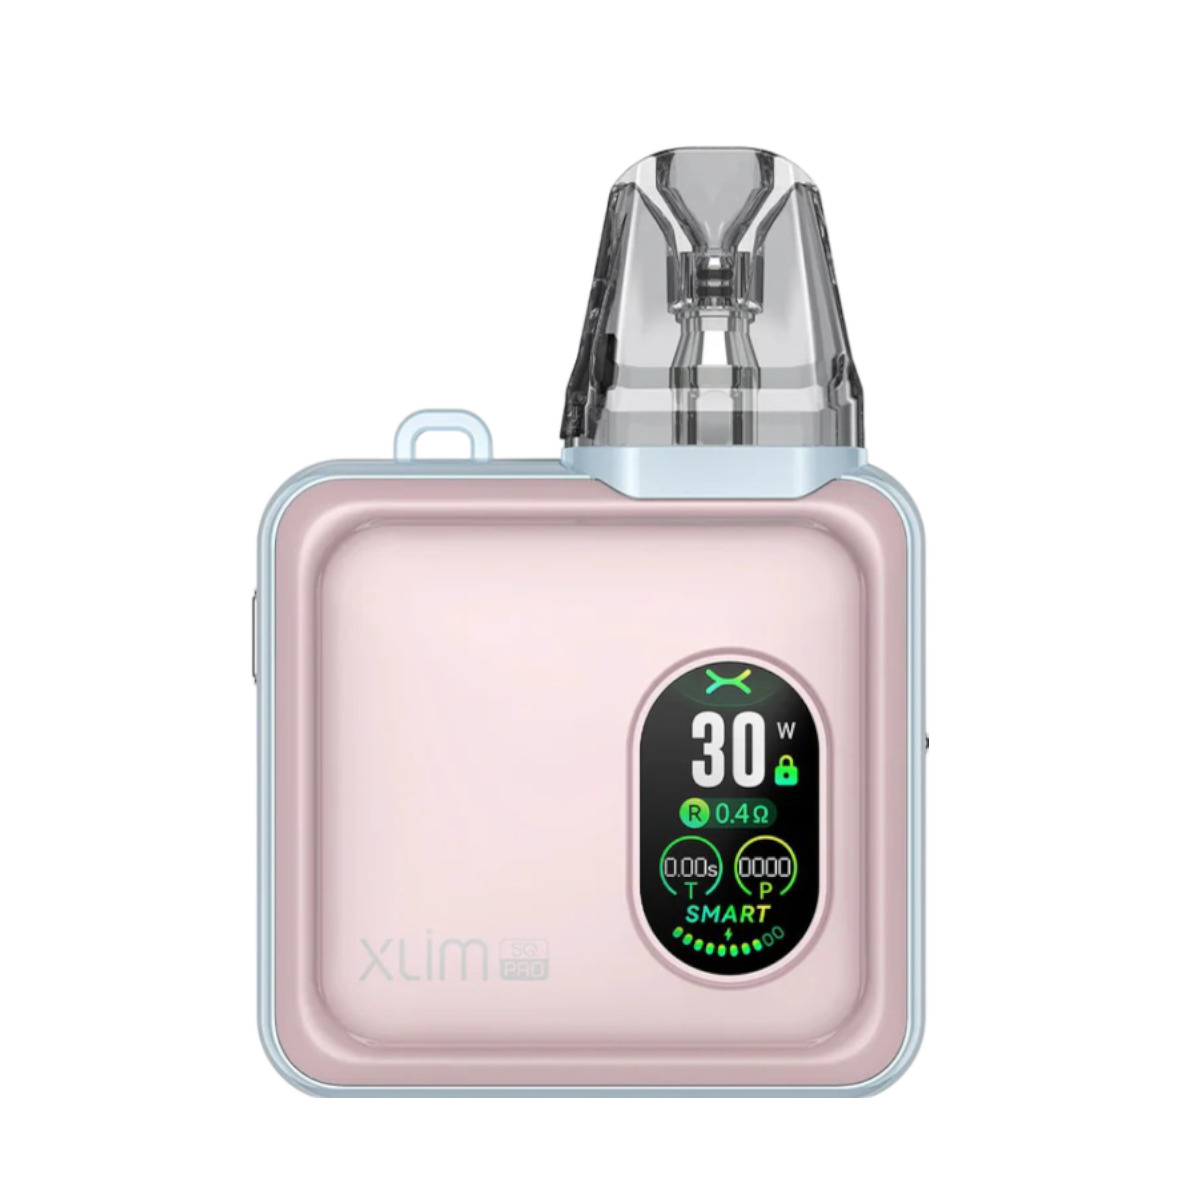 Oxva Xlim SQ Pro Pod System Kit Pastel Pink  